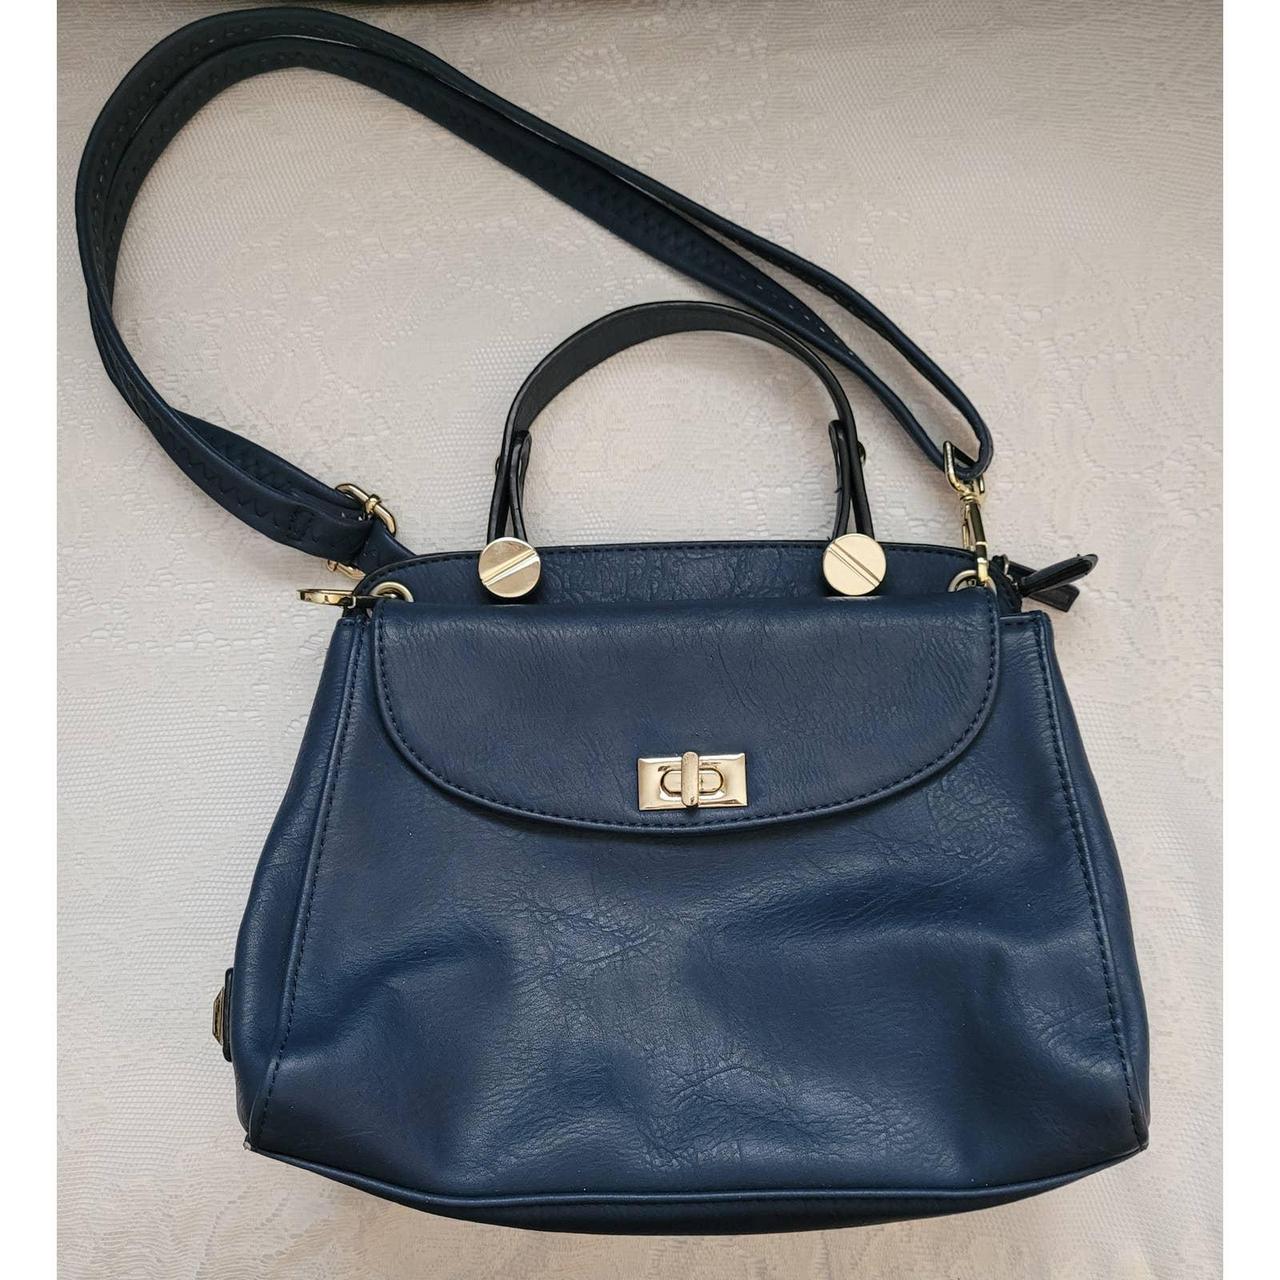 Catherine Malandrino Black Crossbody Clutch Bag Purse | eBay